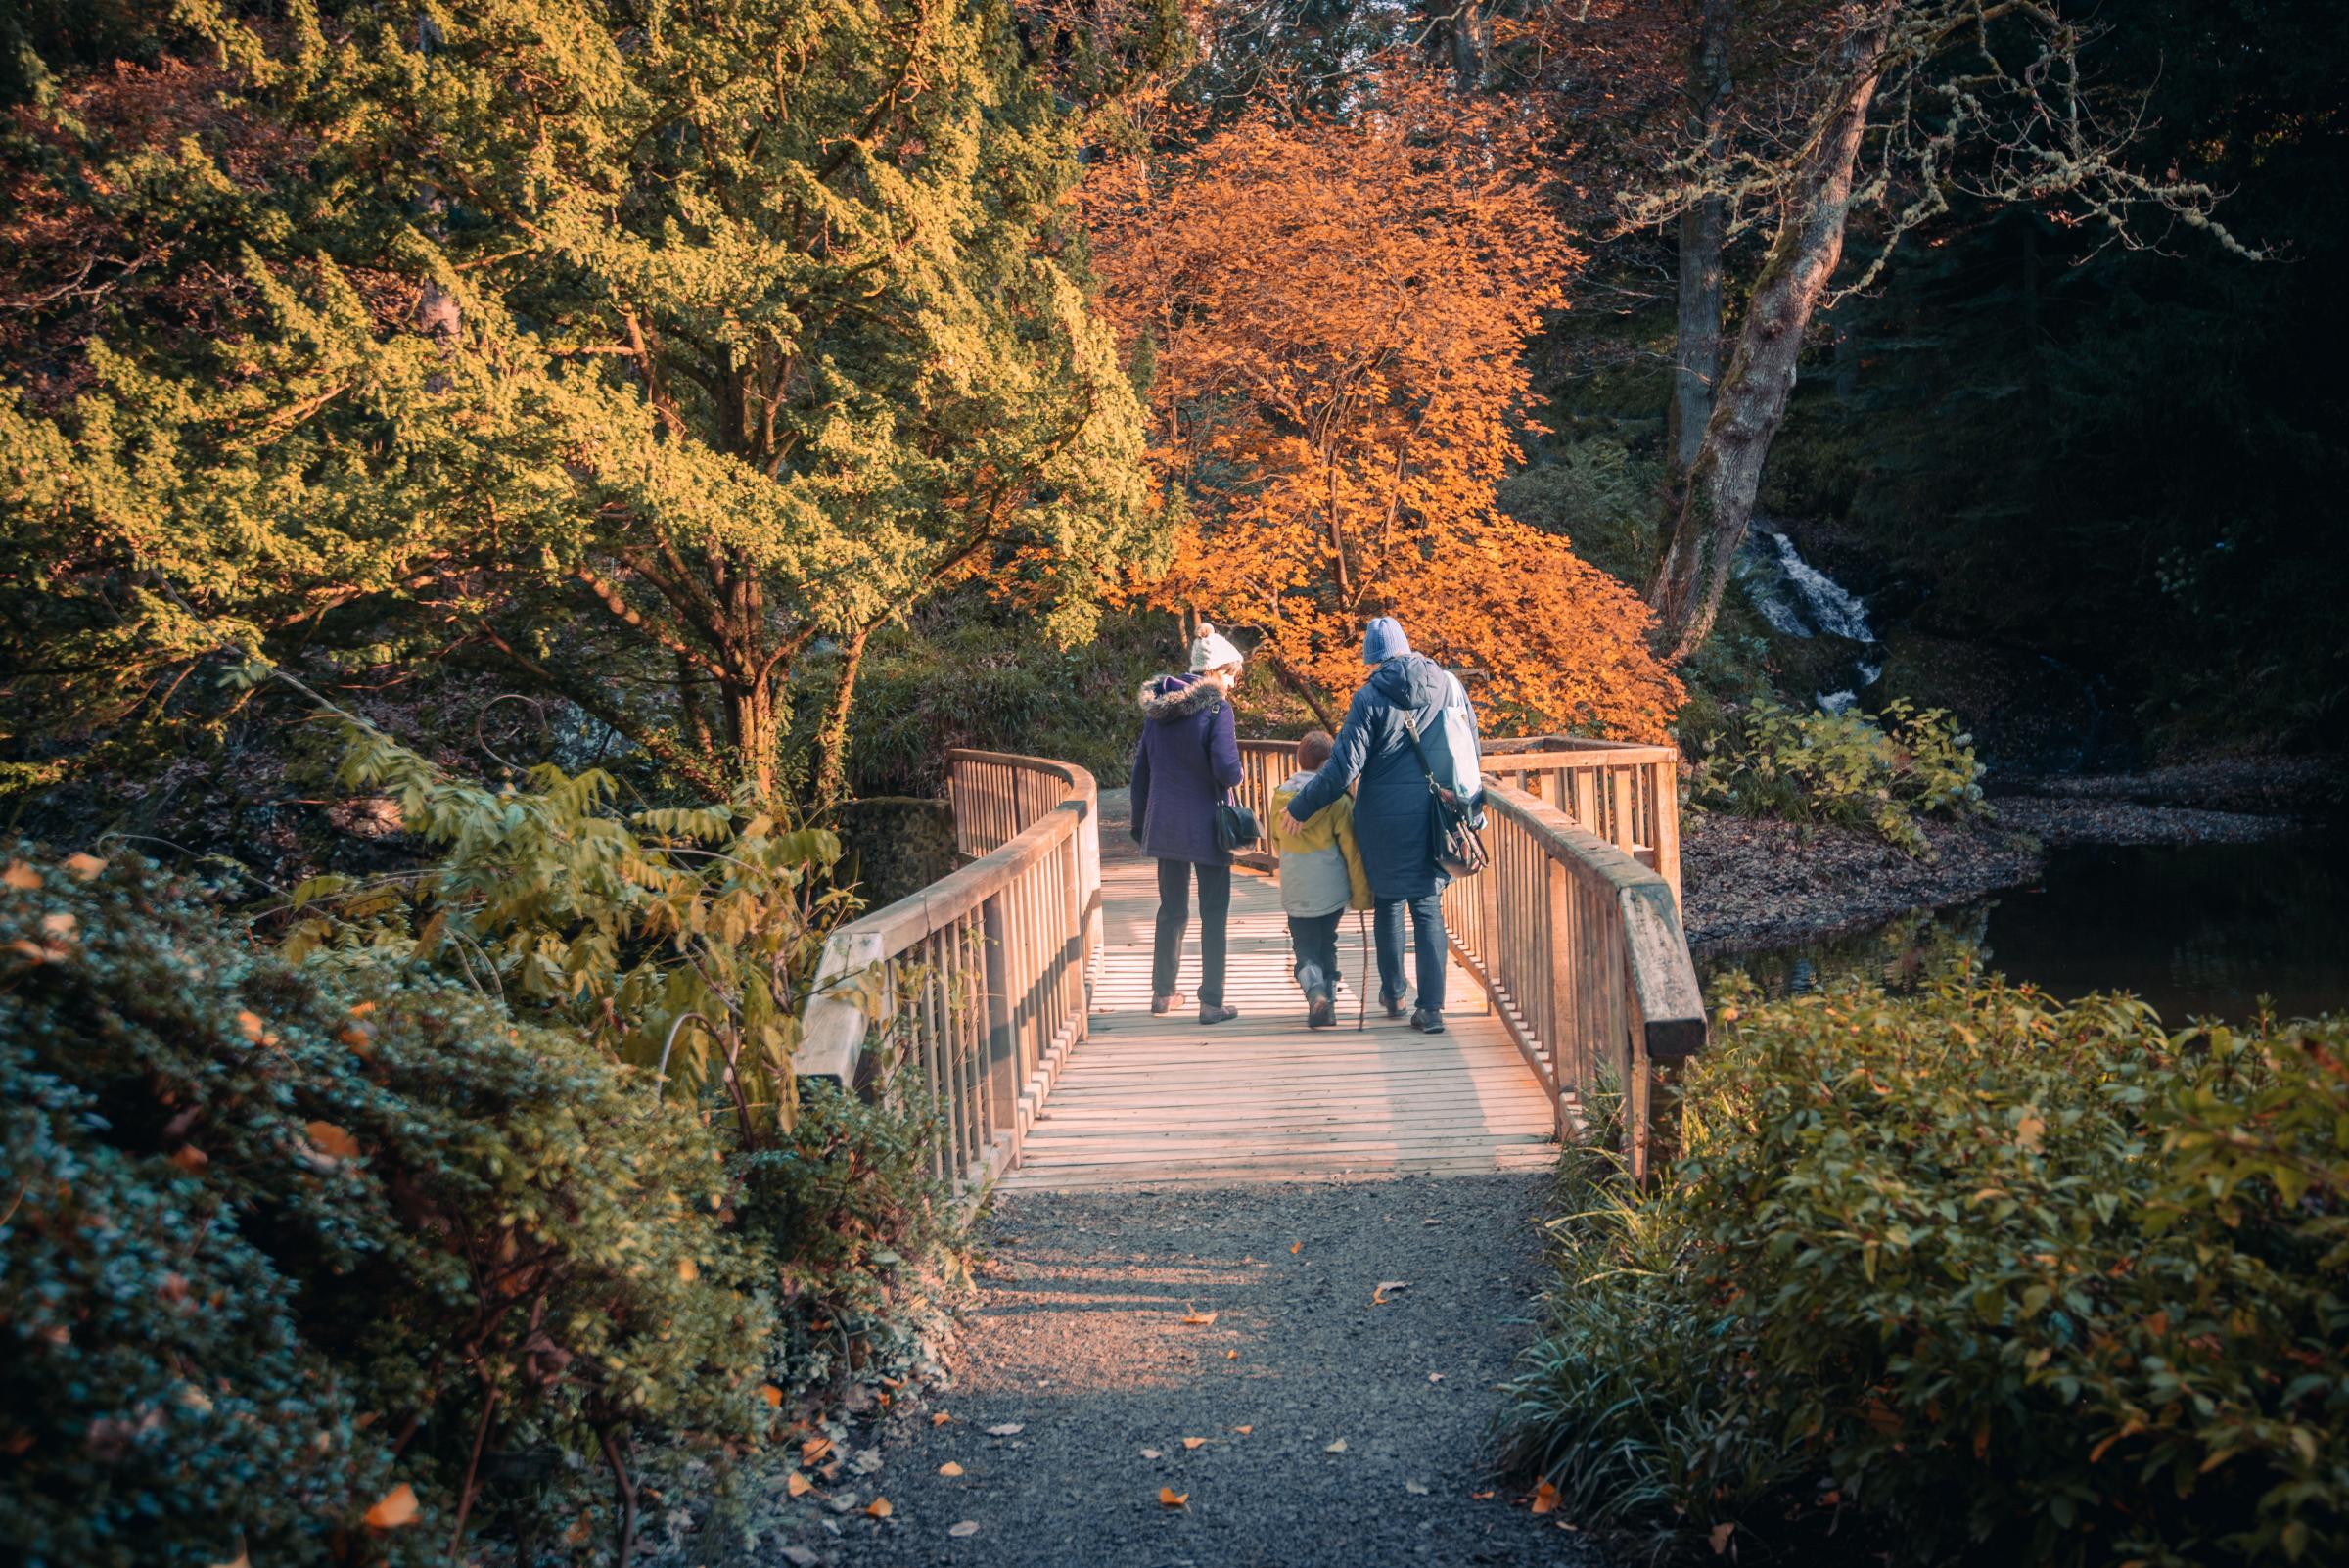 Bodnant Garden winter walk ©National Trust Images Lee Evans